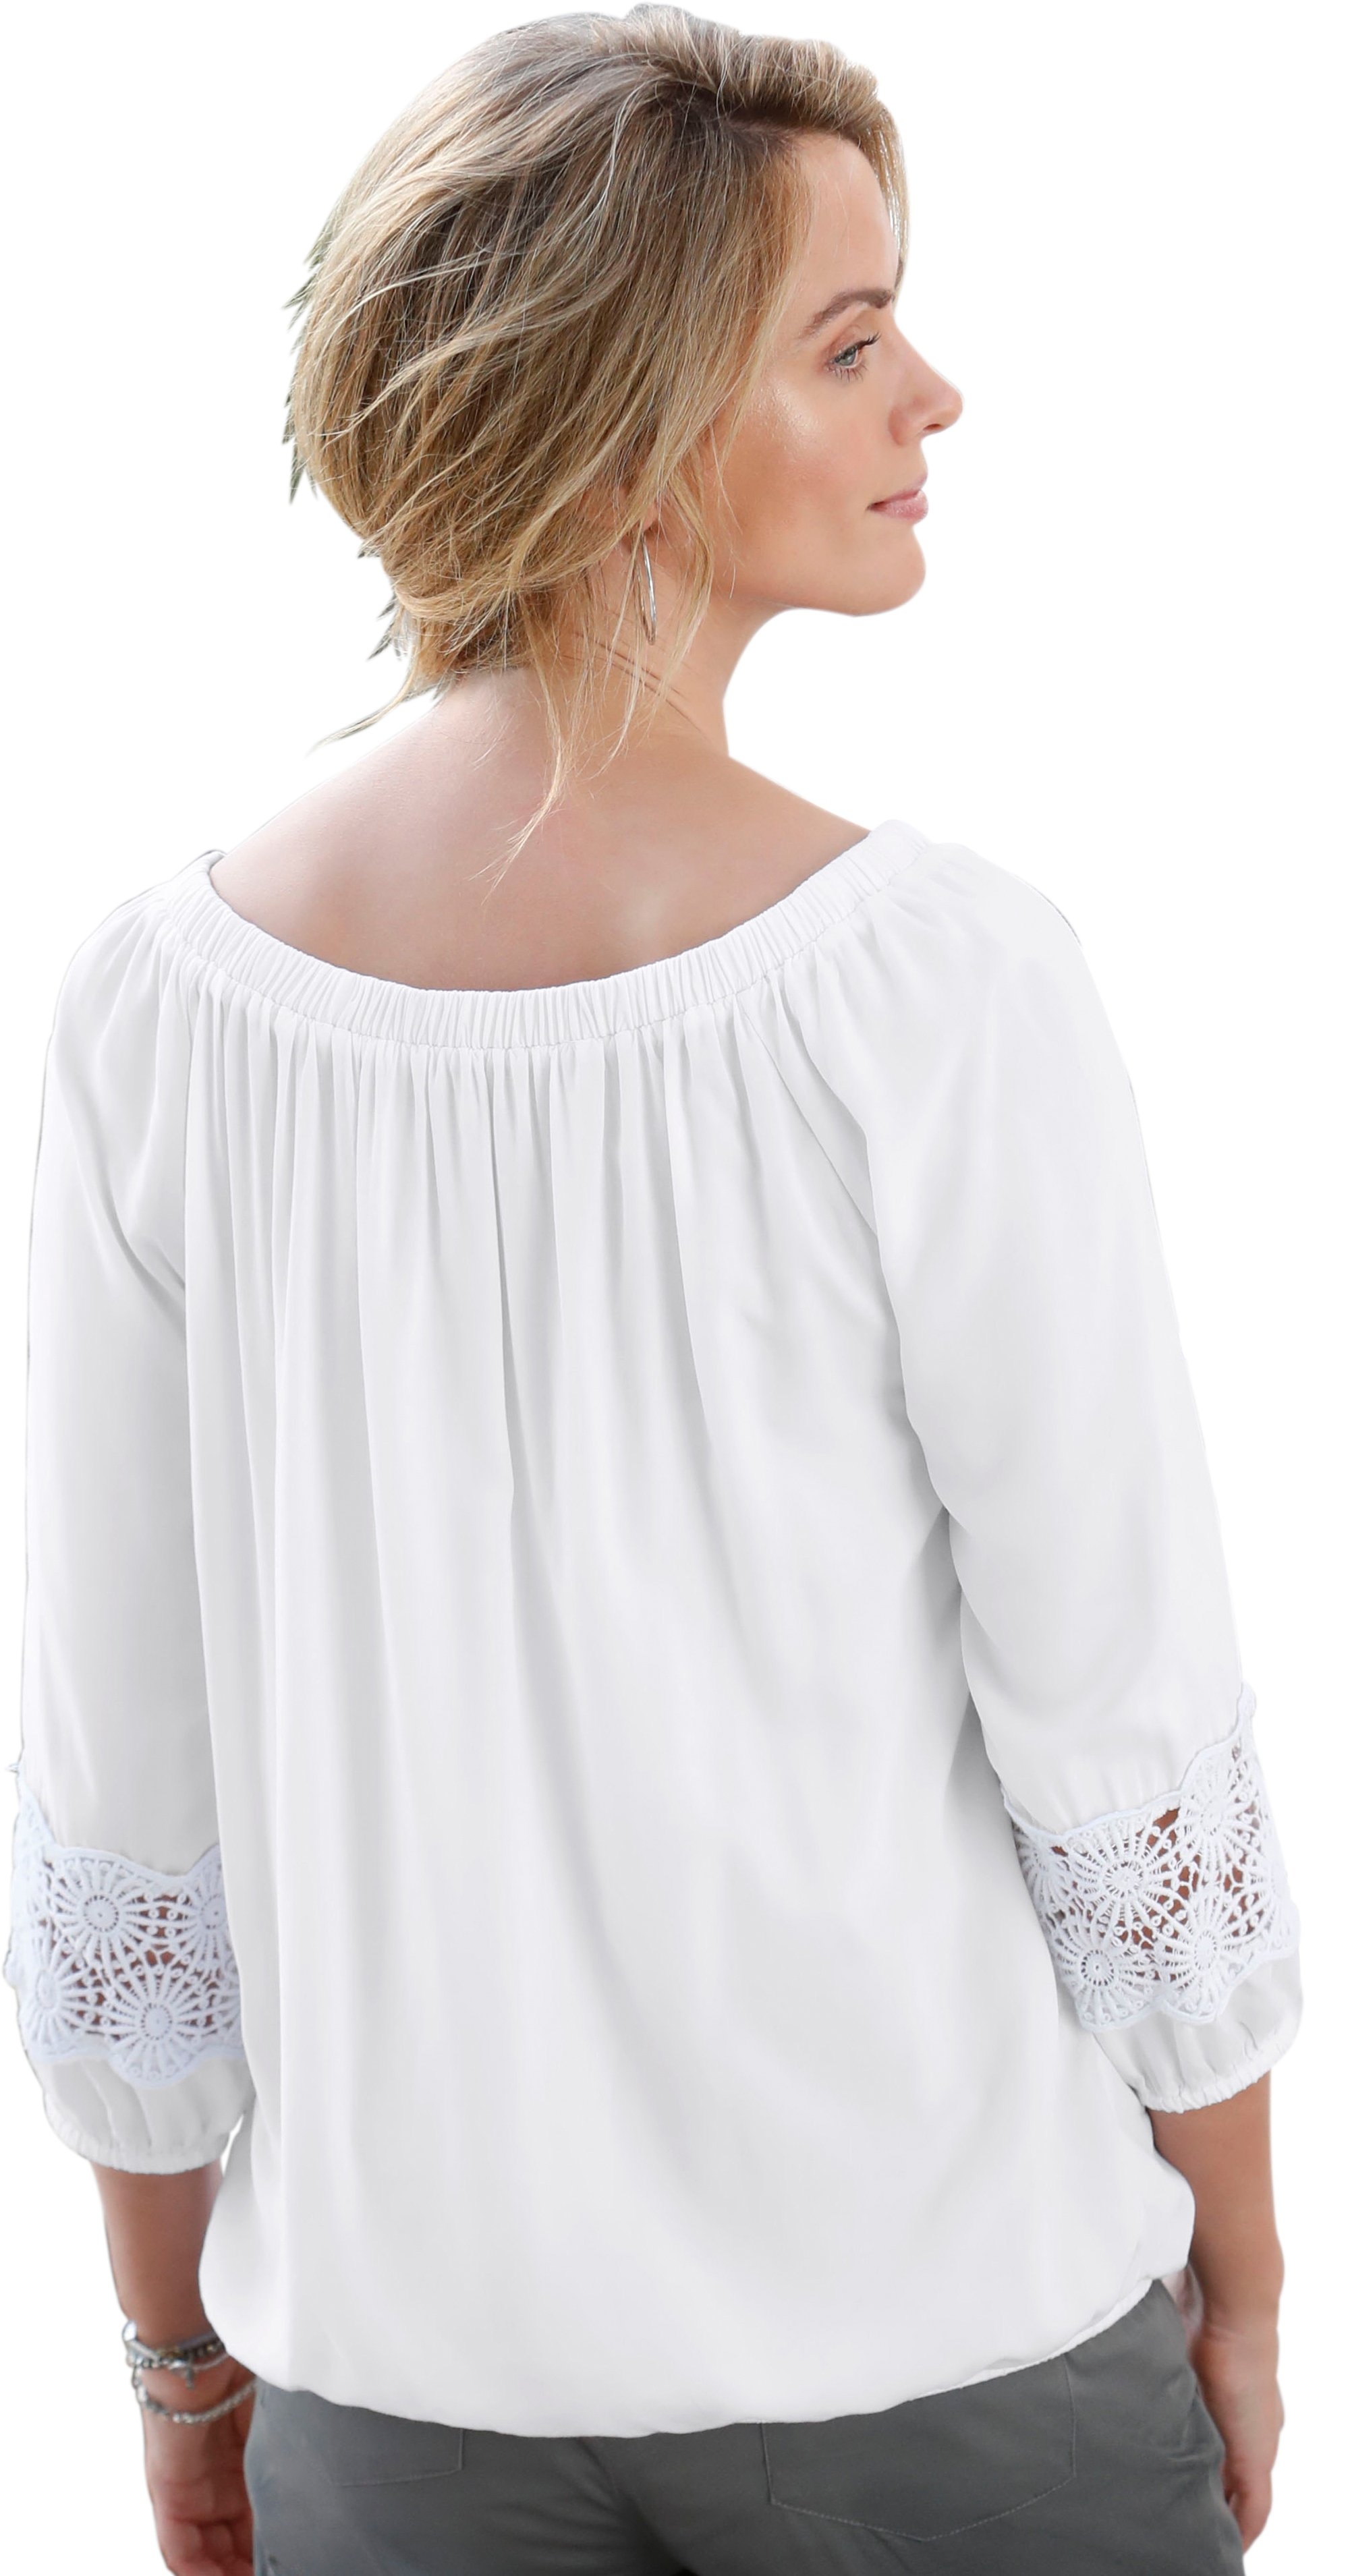 Nieuw création L blouse met mooie kant in de online shop | OTTO PR-21